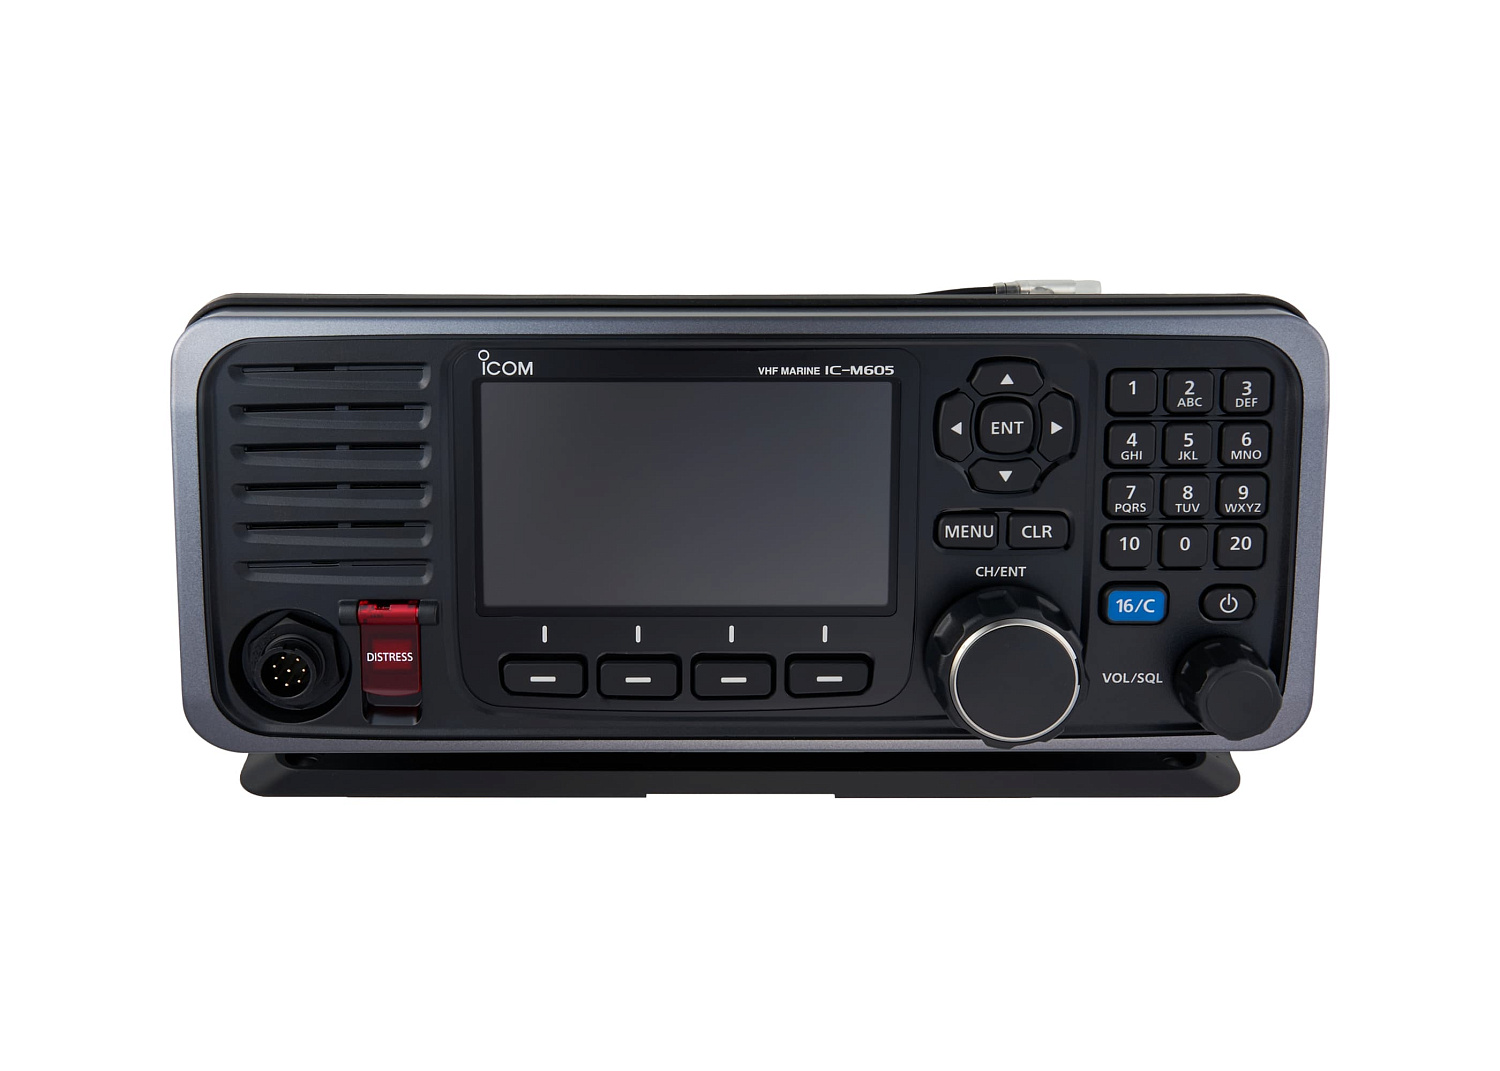 ICOM IC-M605EURO VHF Marine Transceiver / with AIS and GNSS Receiver